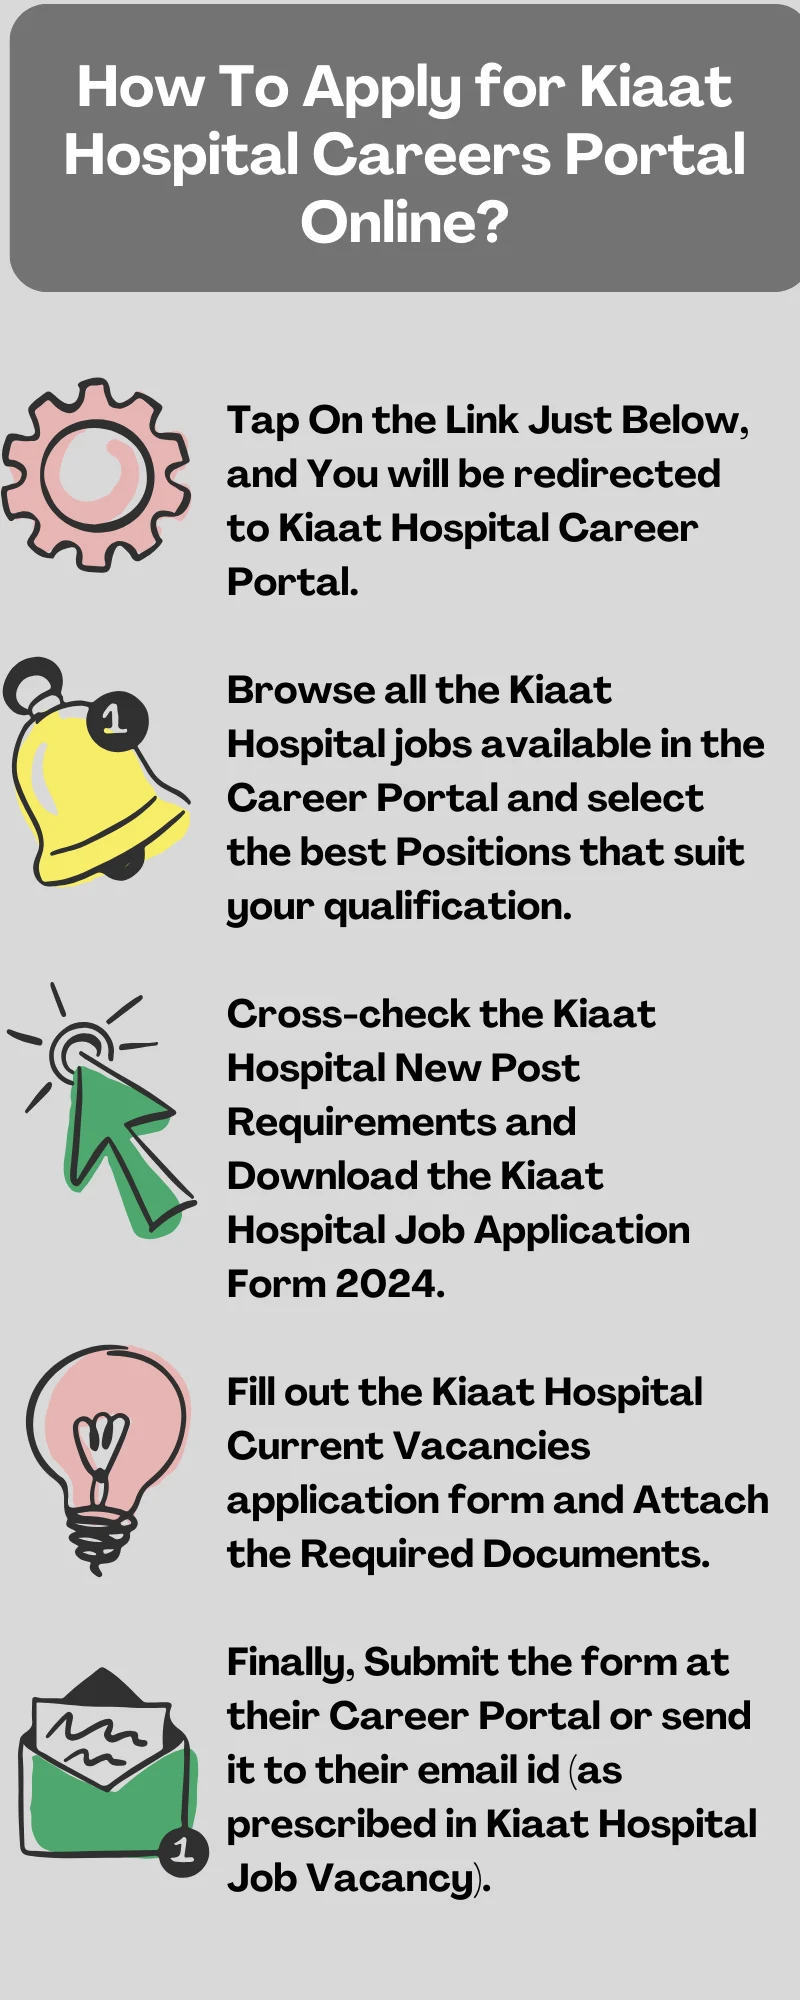 How To Apply for Kiaat Hospital Careers Portal Online?